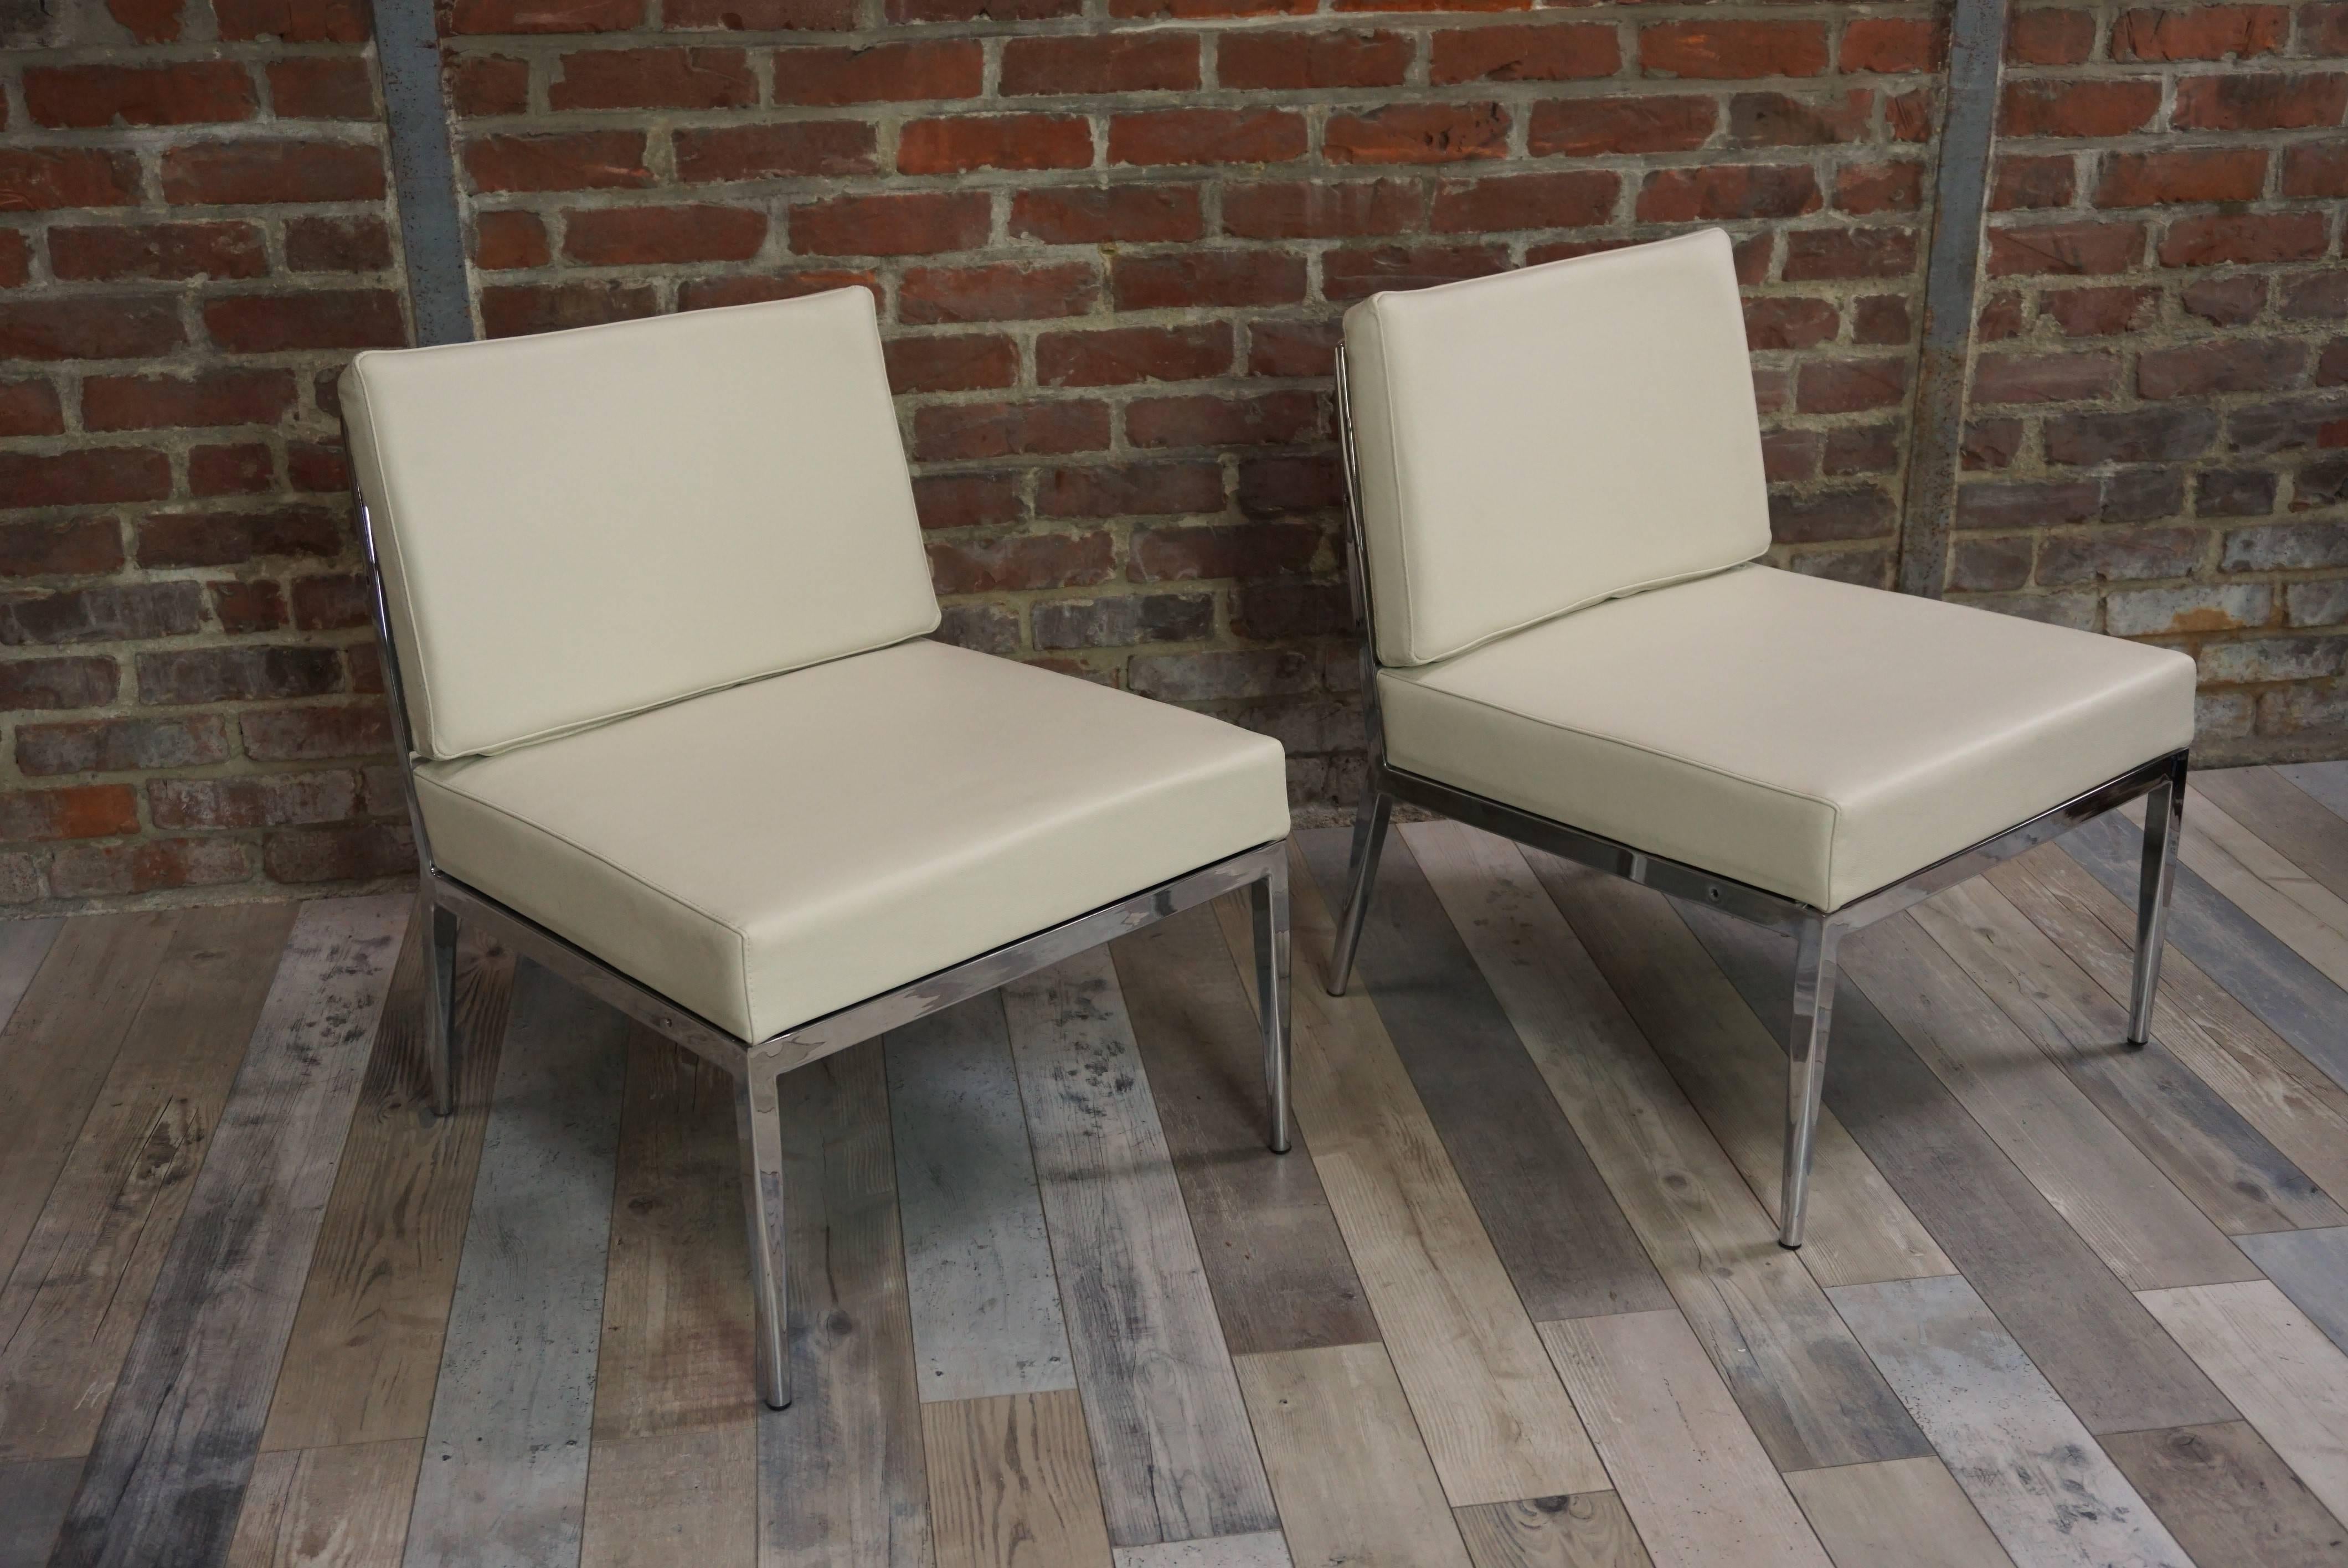 European Italian Design White Leather and Chrome Metal Lounger Chairs